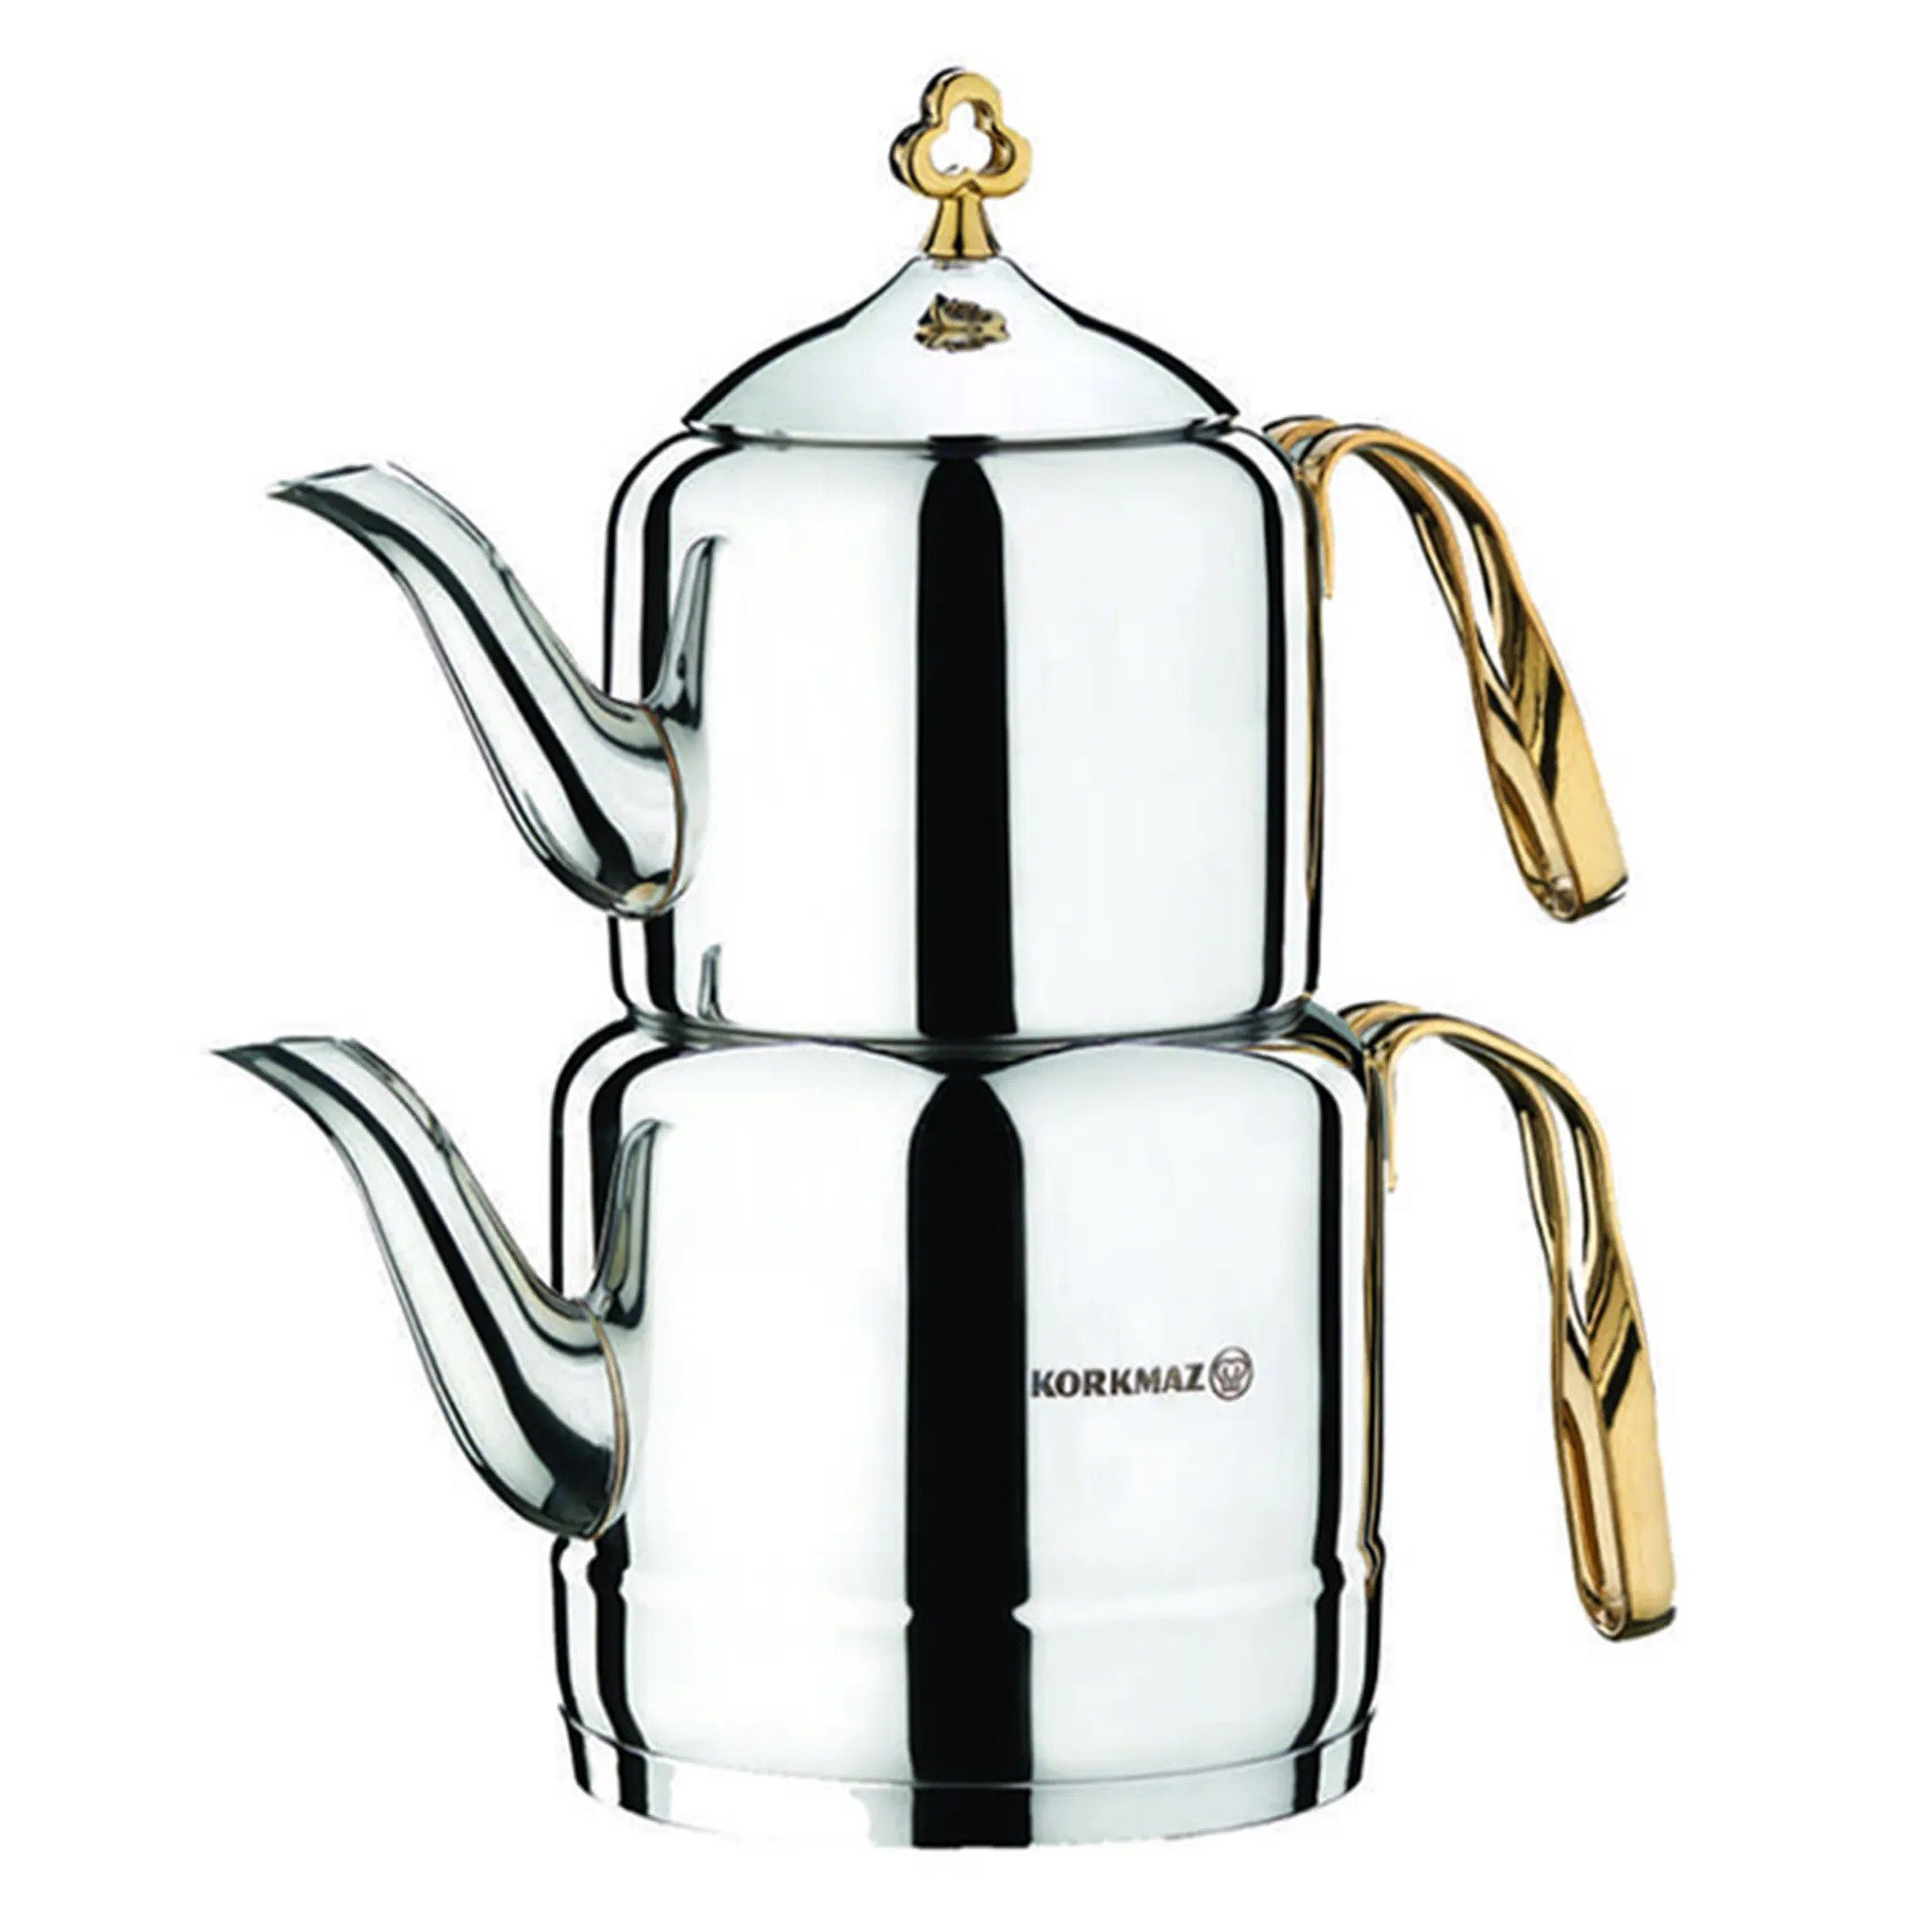 Özberk Teekanne Cintemani, (Packung, 2 teilig), Teekanne Teekocher mit Wasserkessel, 3,1 Liter, Gold